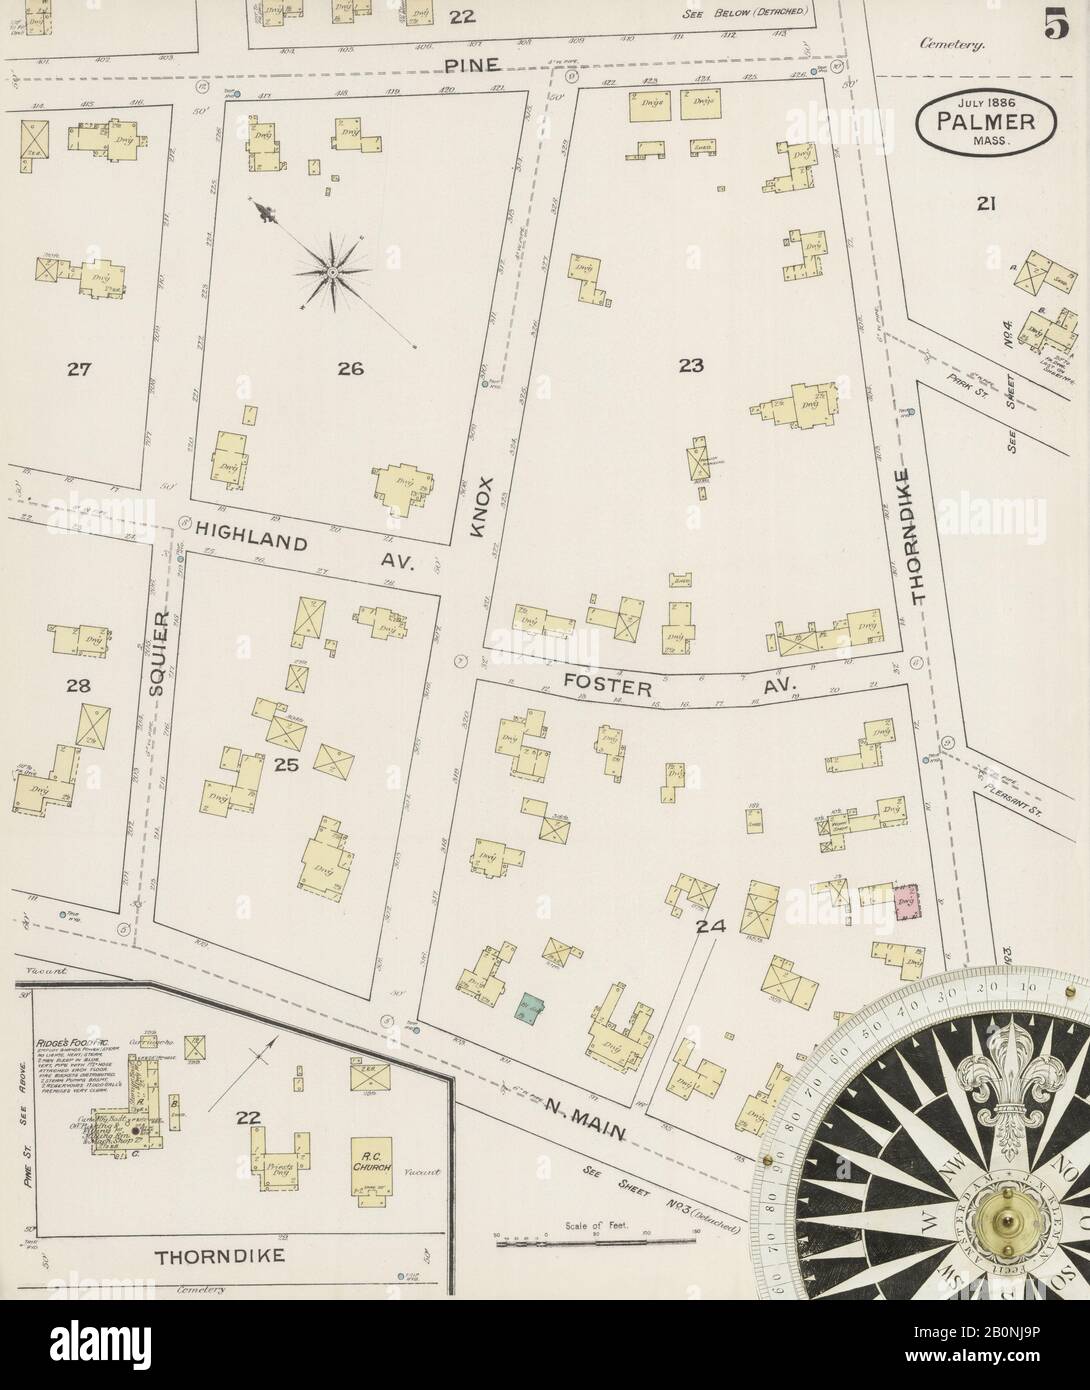 Bild 5 von Sanborn Fire Insurance Map aus Palmer, Hampden County, Massachusetts. Juli 1886. 5 Blatt(e), Amerika, Straßenkarte mit einem Kompass Aus Dem 19. Jahrhundert Stockfoto